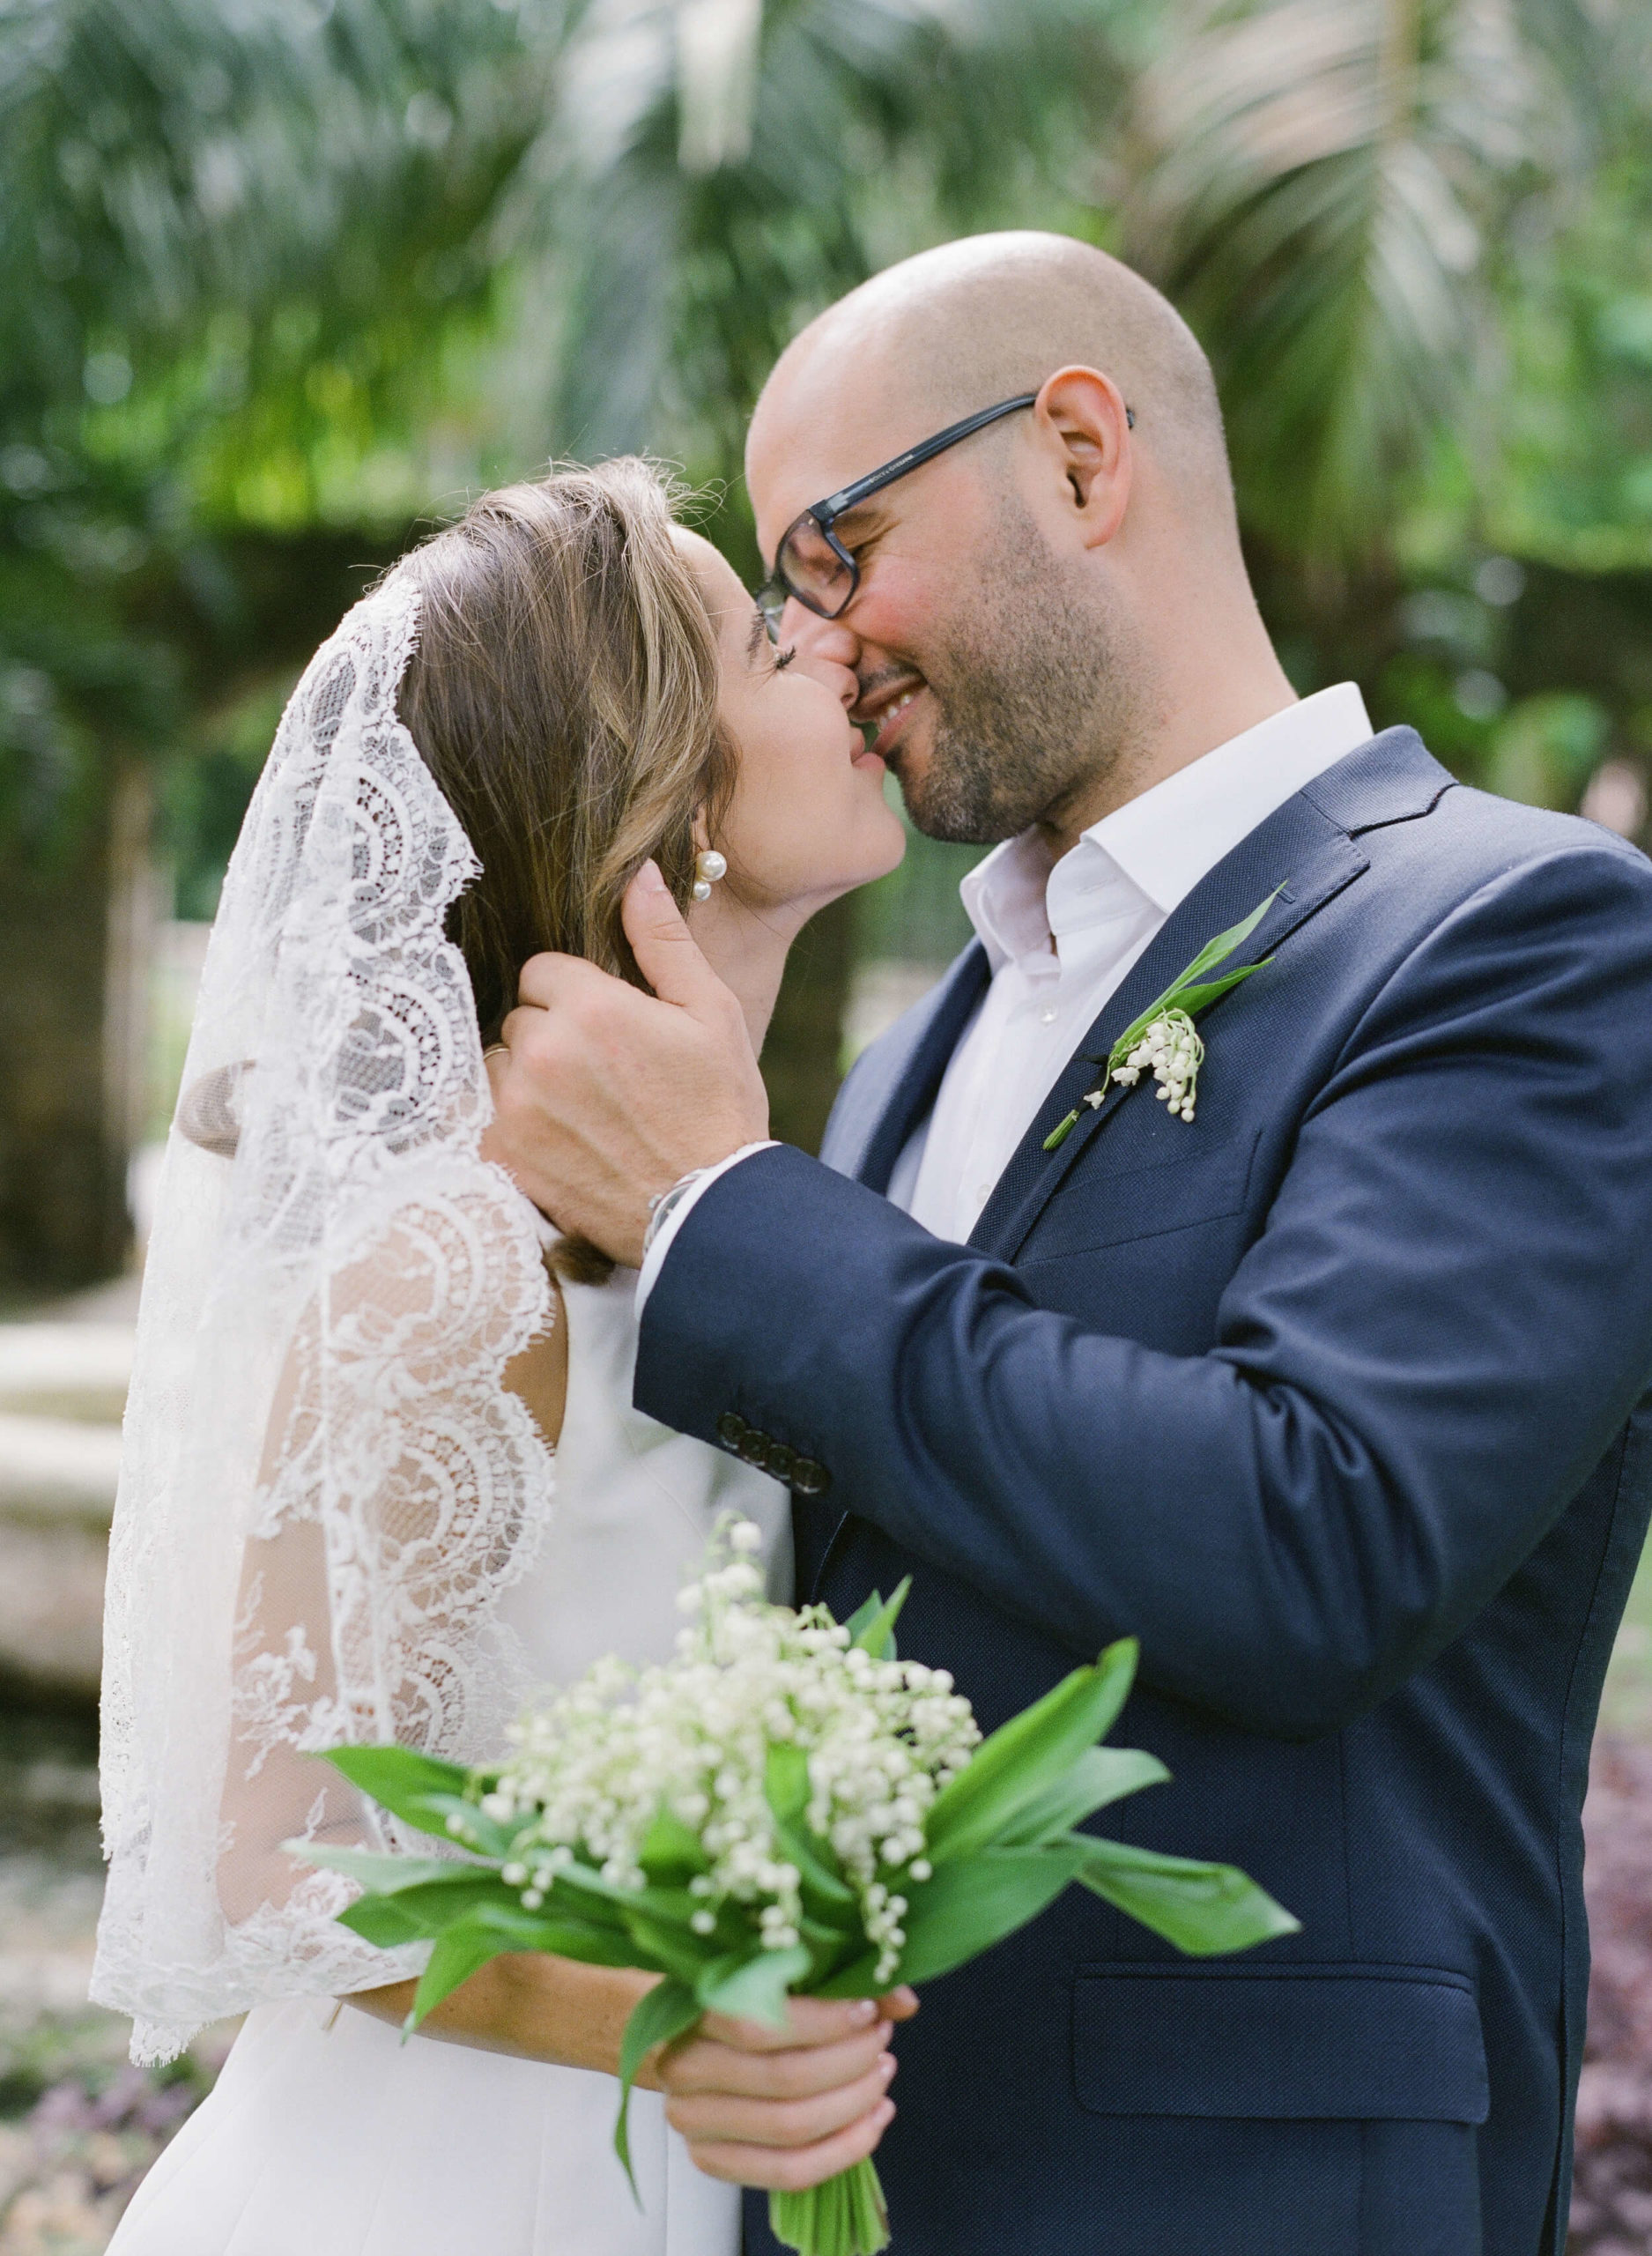 Stephanie and Pedro kissing at their Miami wedding